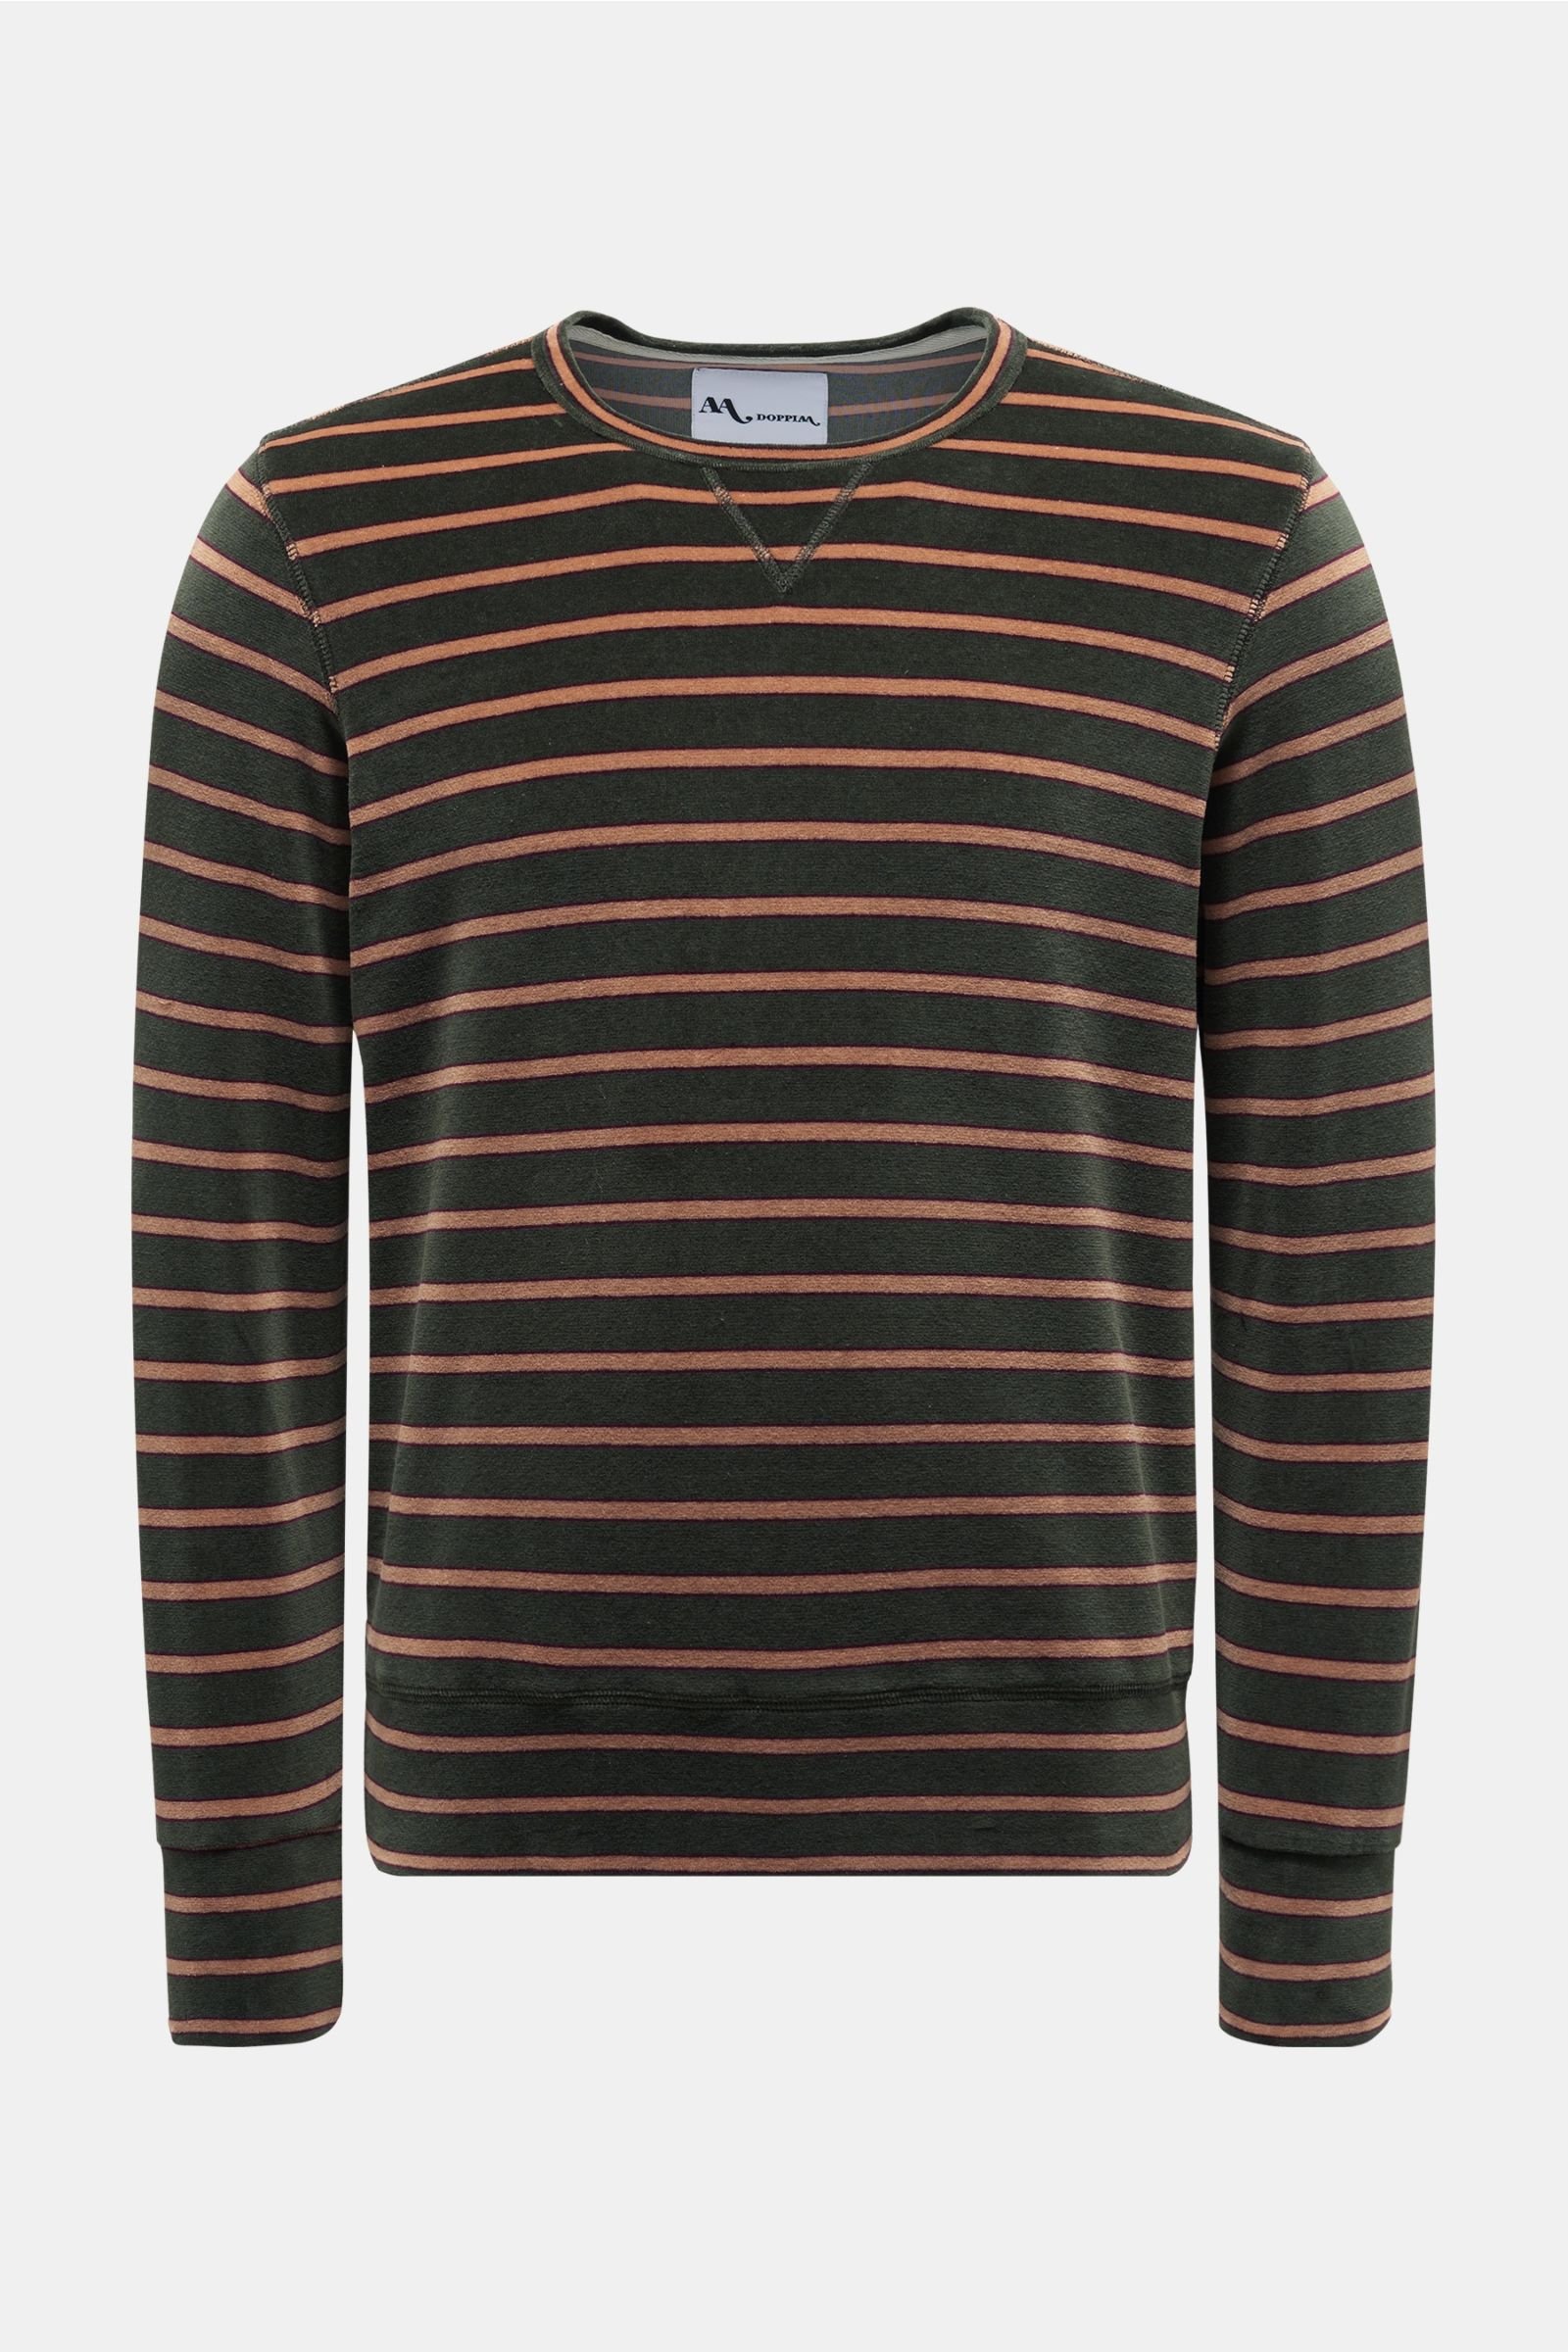 Plush fabric crew neck sweatshirt 'Aamerican' olive/light brown striped